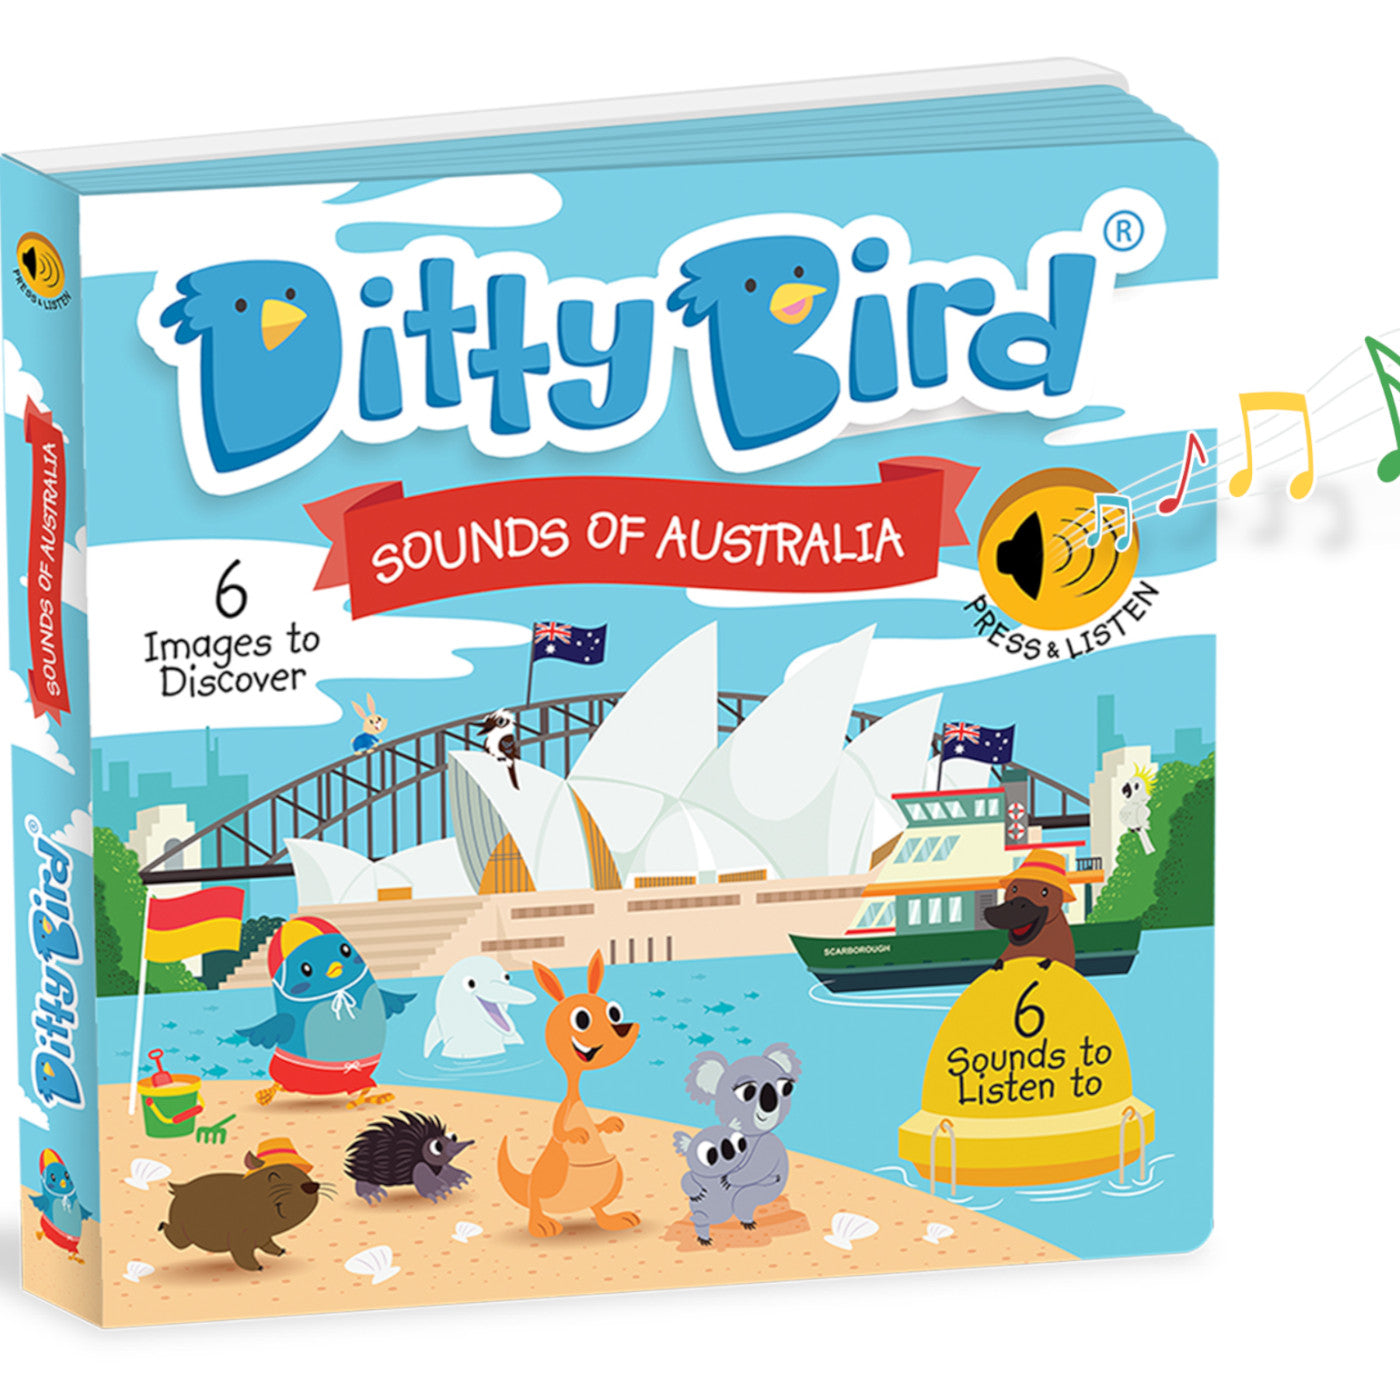 Ditty Bird Sounds of Australia Board Book 3